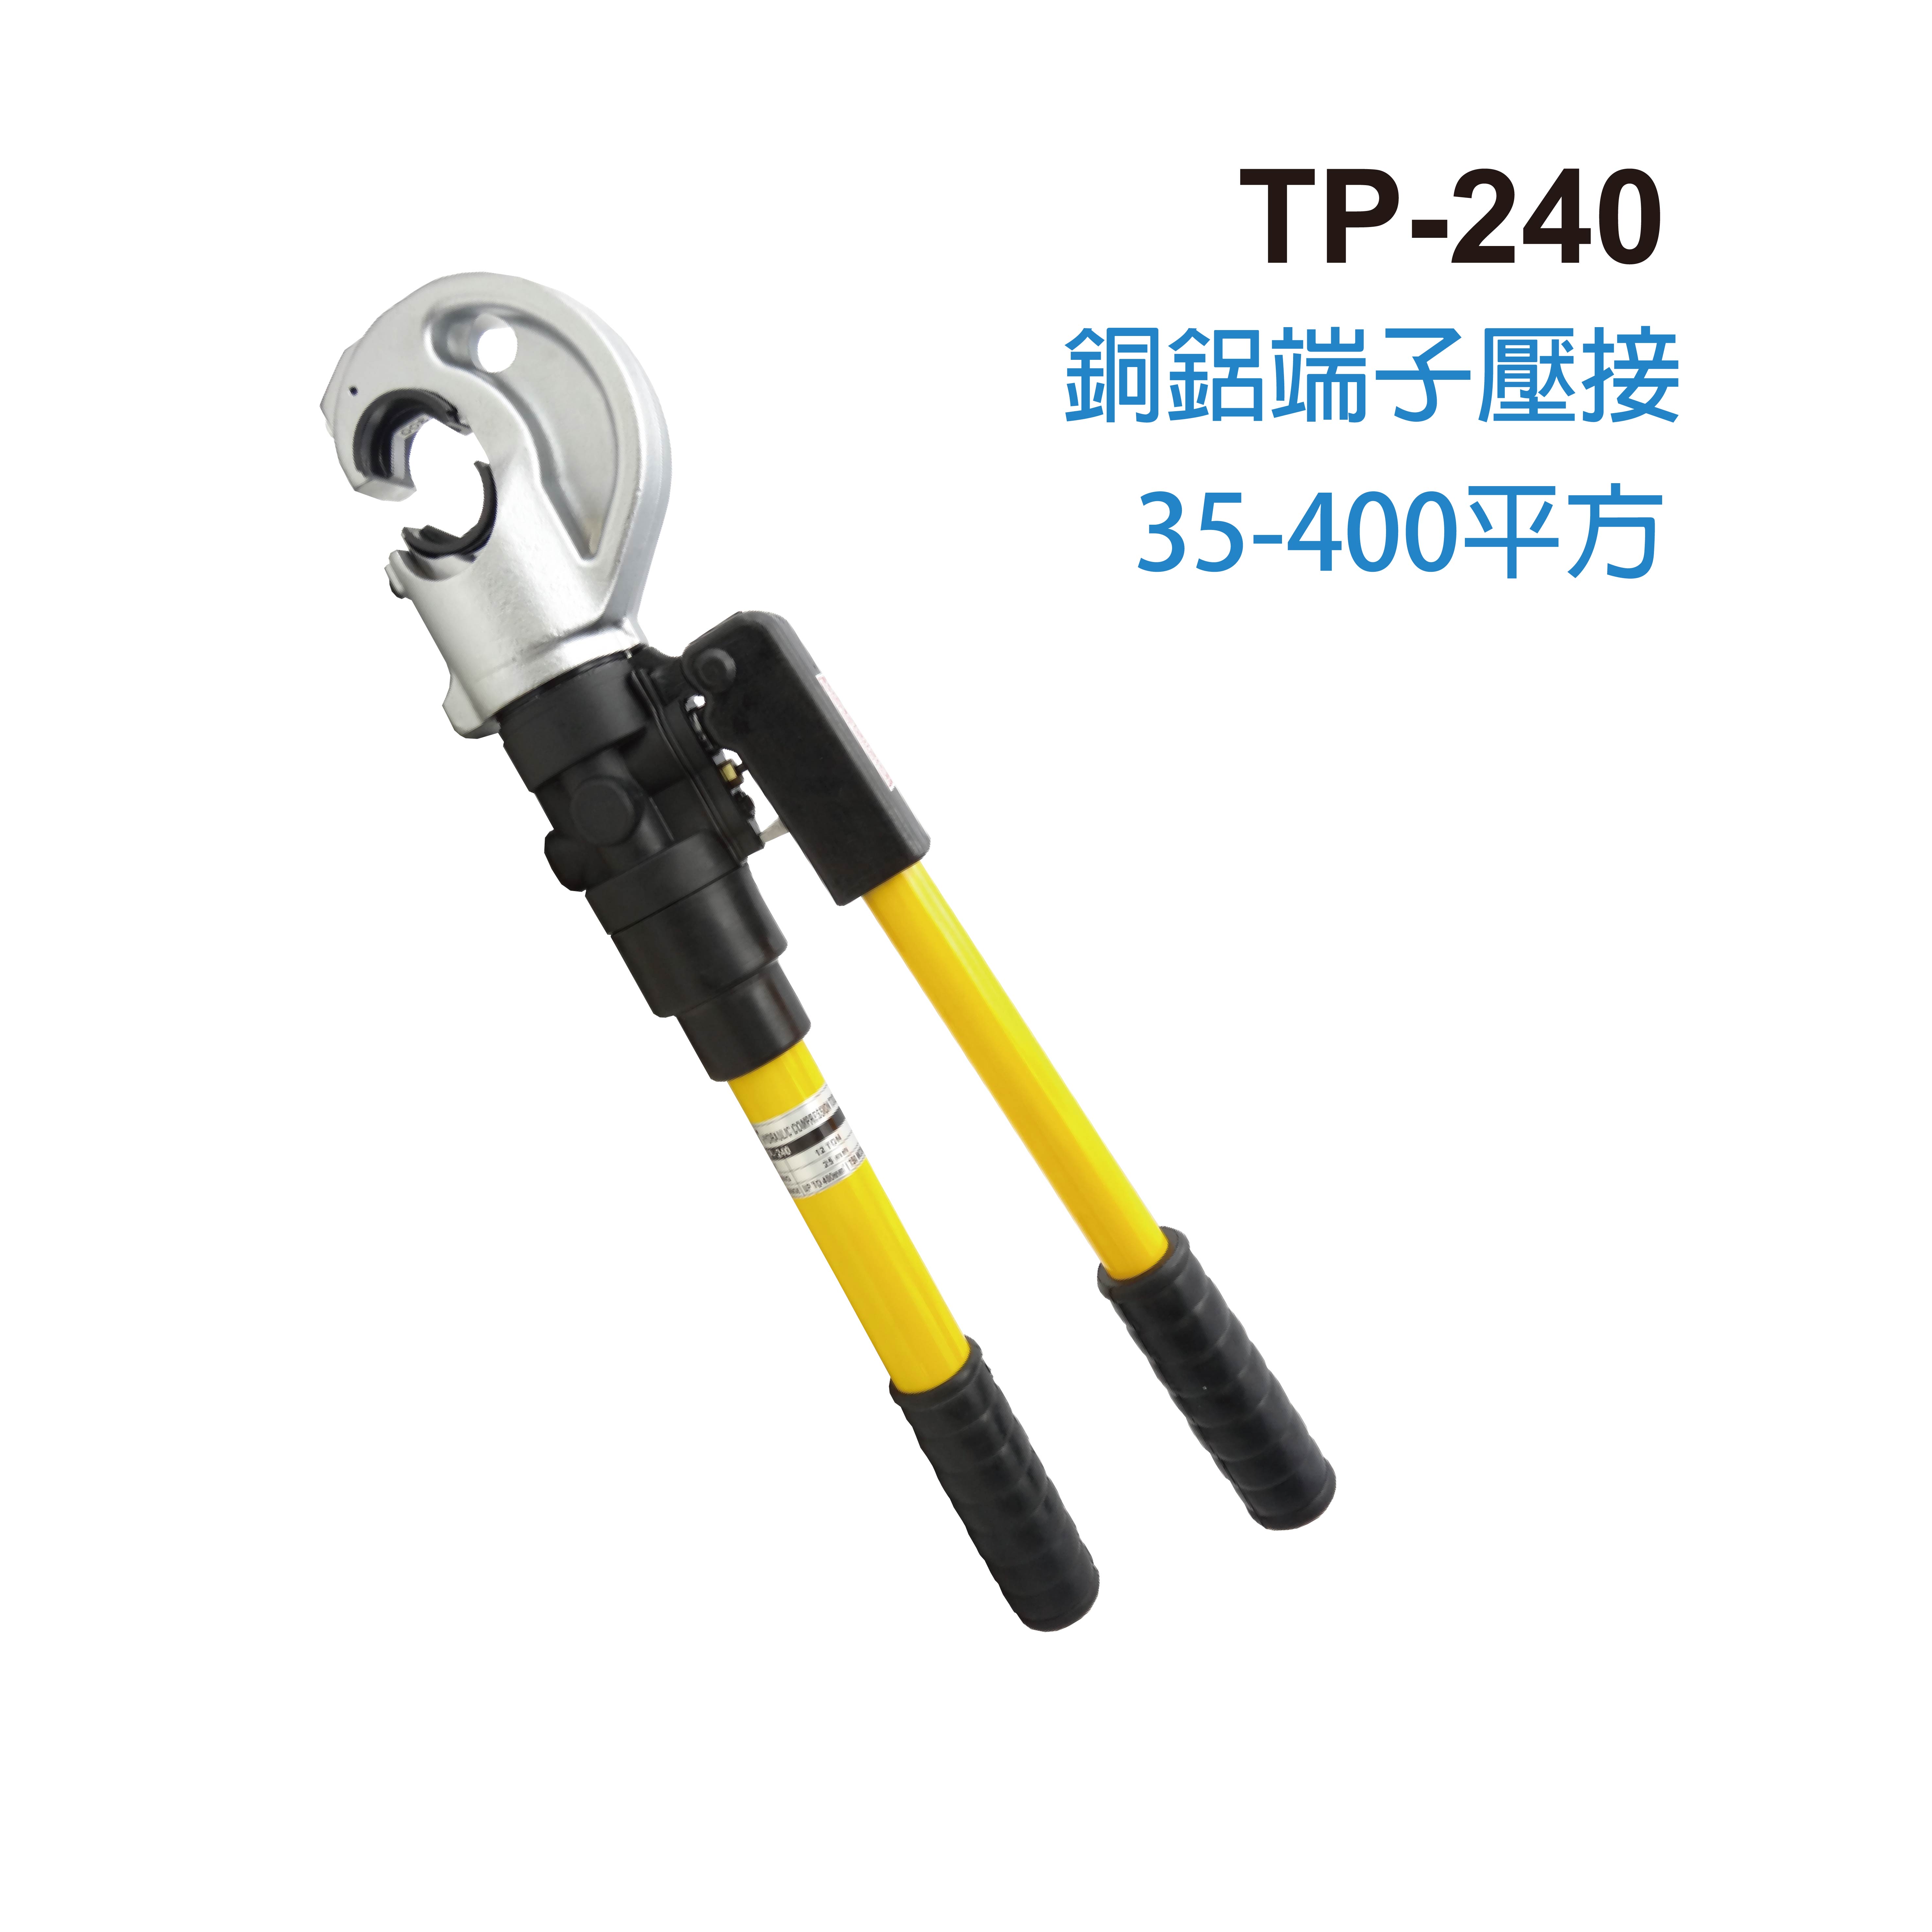 TP-240 MANUAL HYDRAULIC CRIMPING TOOLS